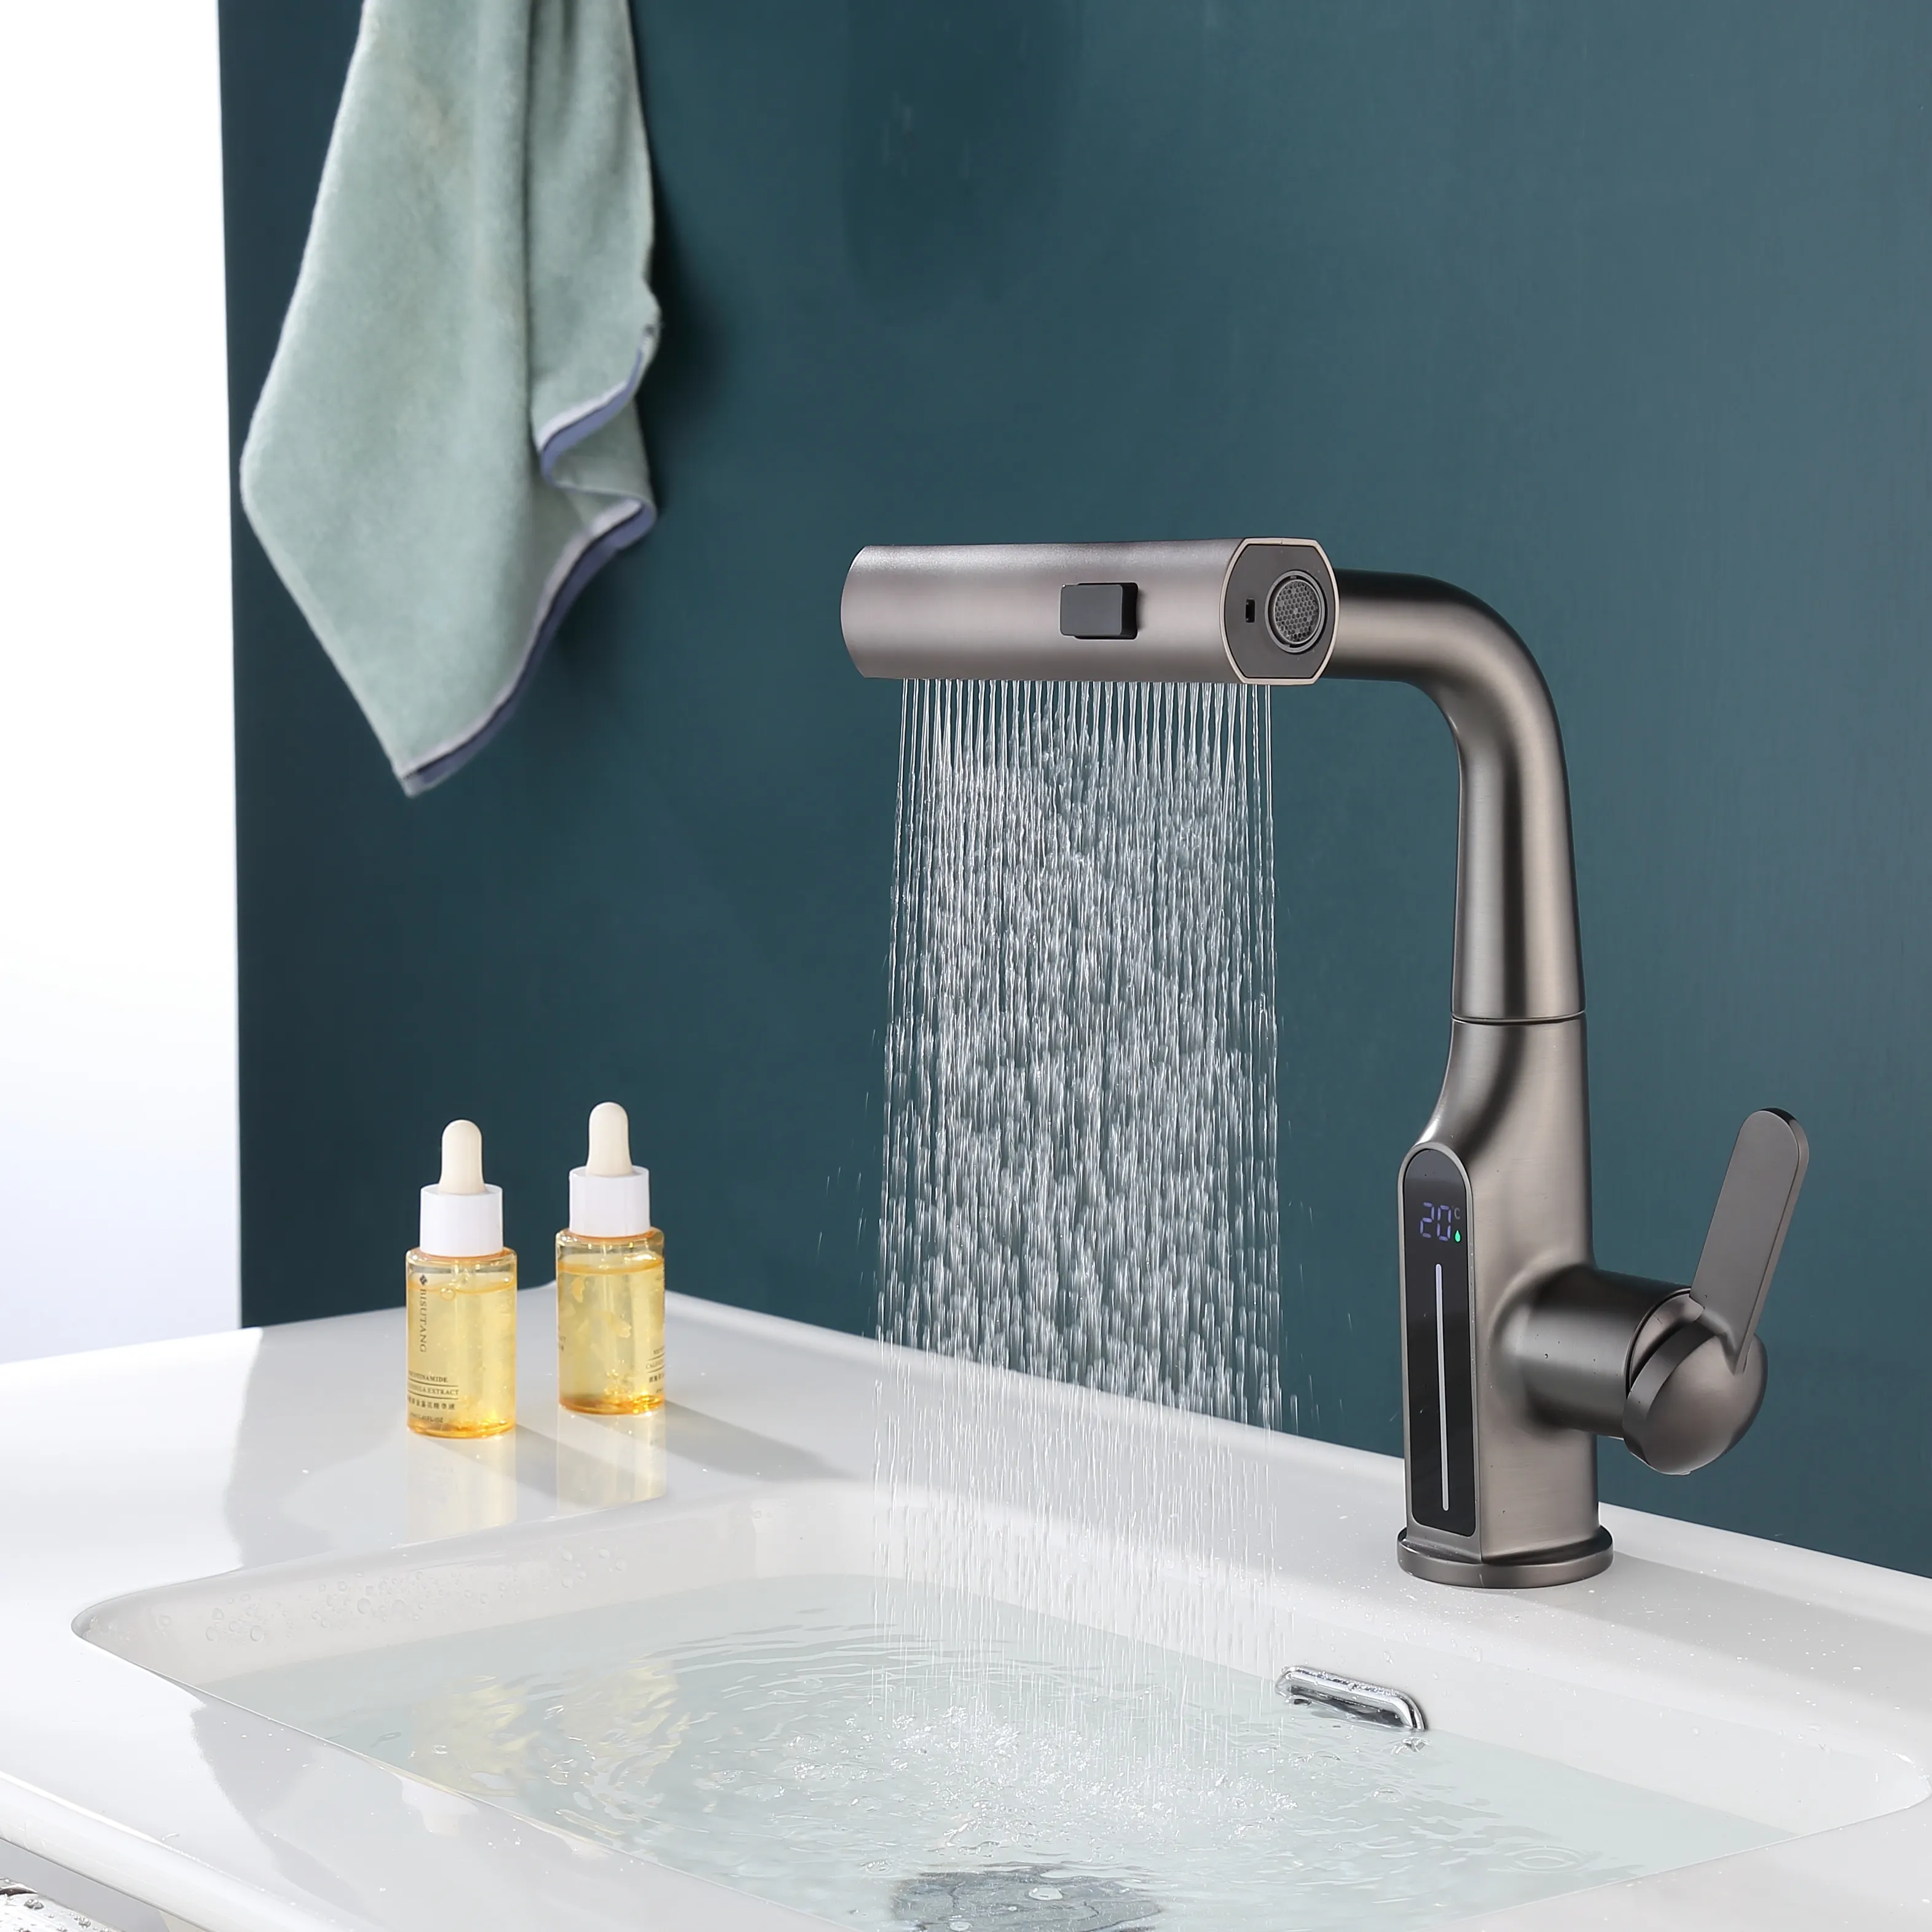 Keran air wastafel Toilet cerdas, keran dapur kamar mandi cerdas, keran wastafel dengan tampilan Digital